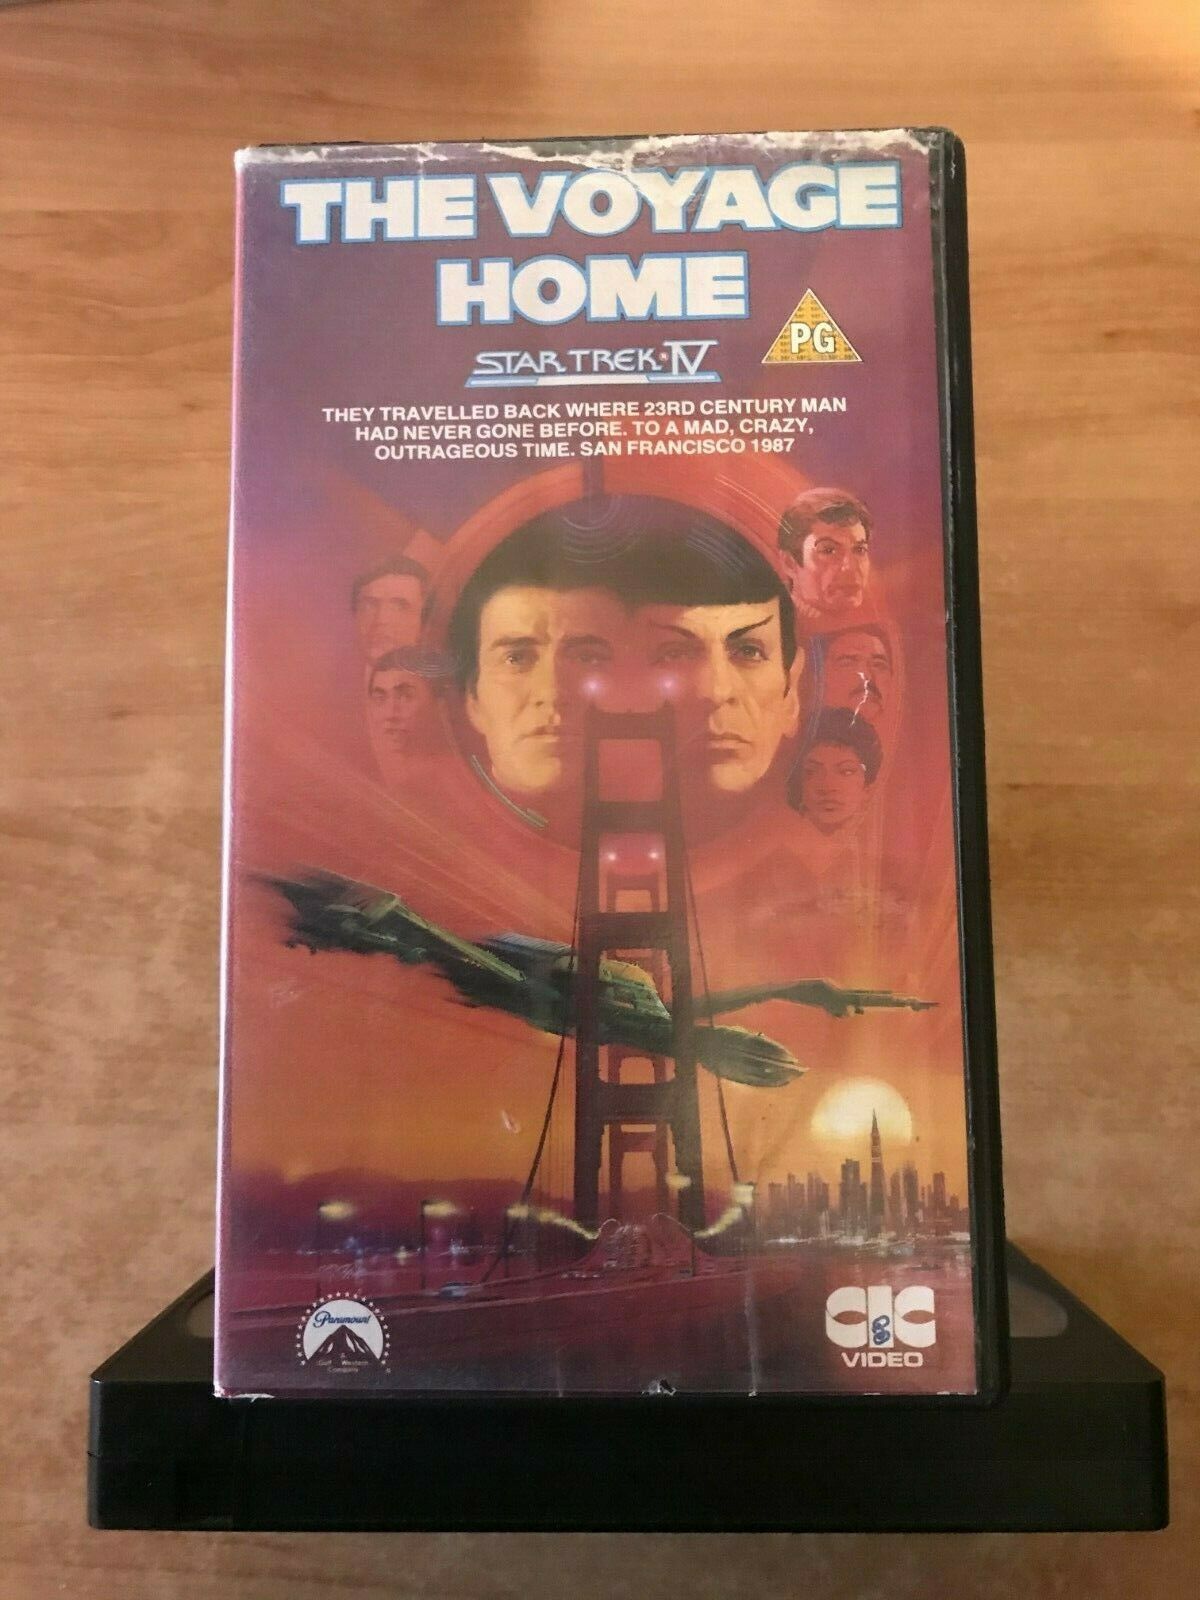 Star Trek 4: The Voyage Home (1986): Space Opera - Leonard Nimoy - Pal VHS-